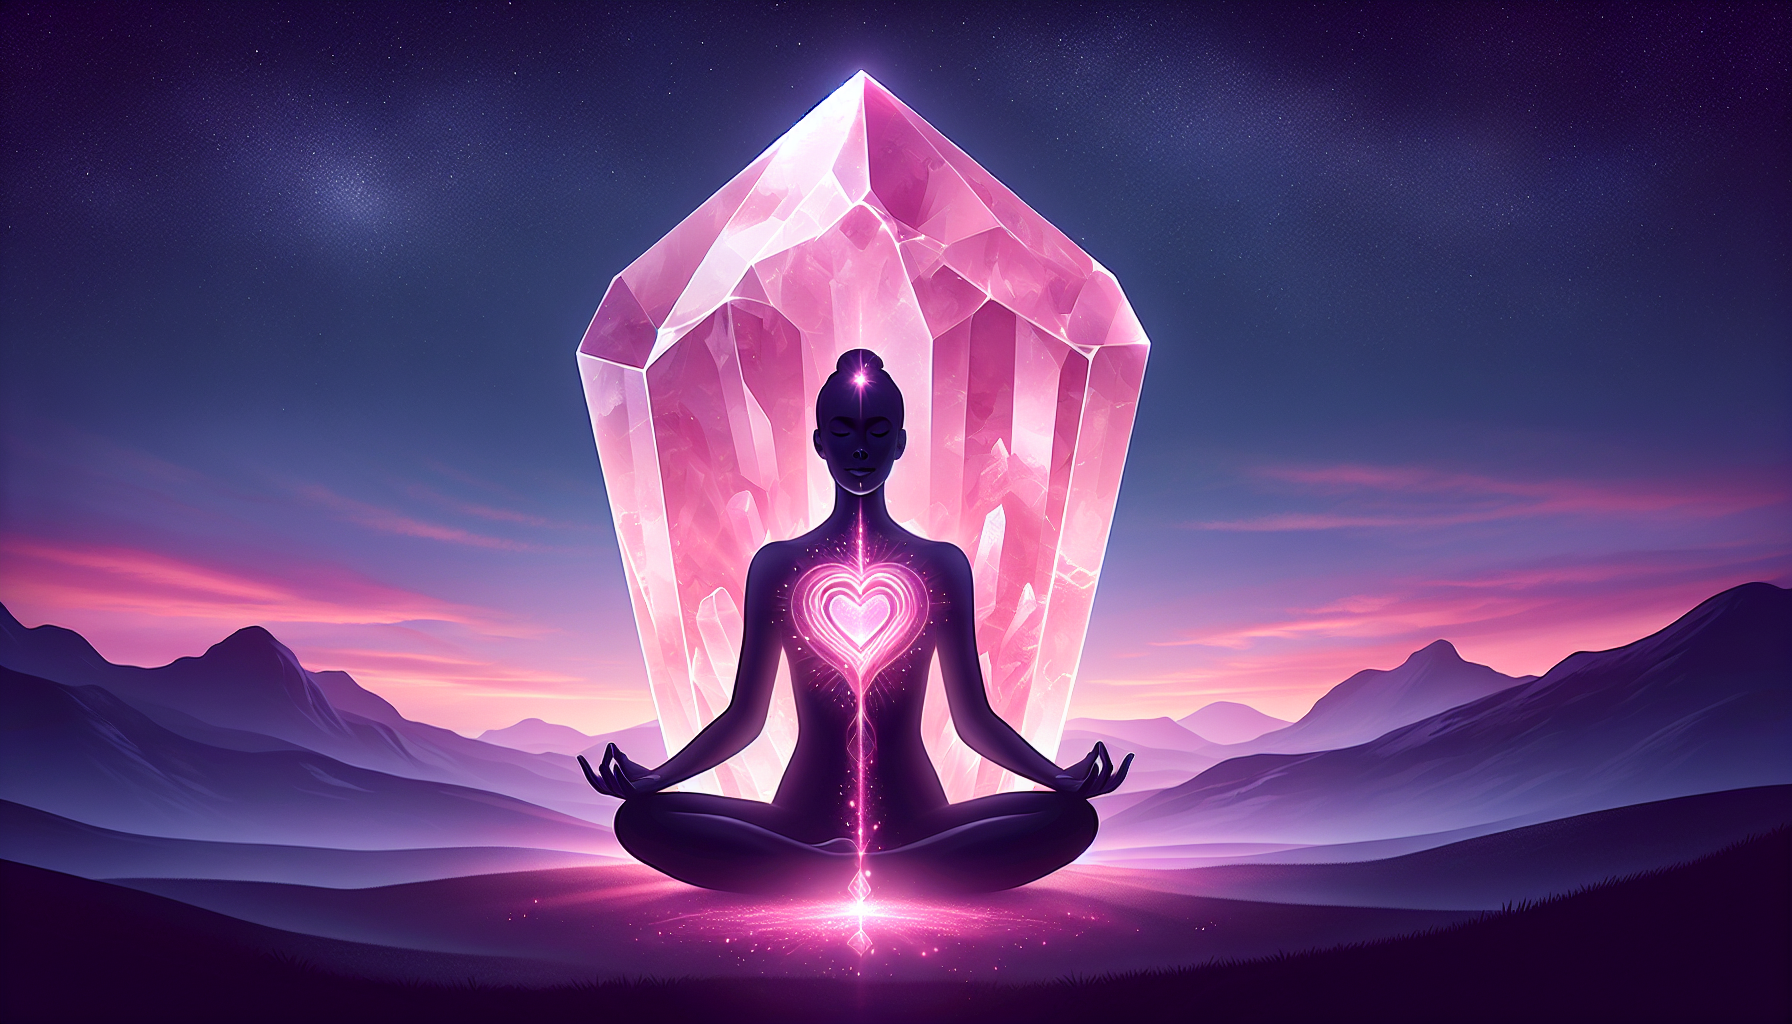 Illustration of rose quartz placed on the heart chakra